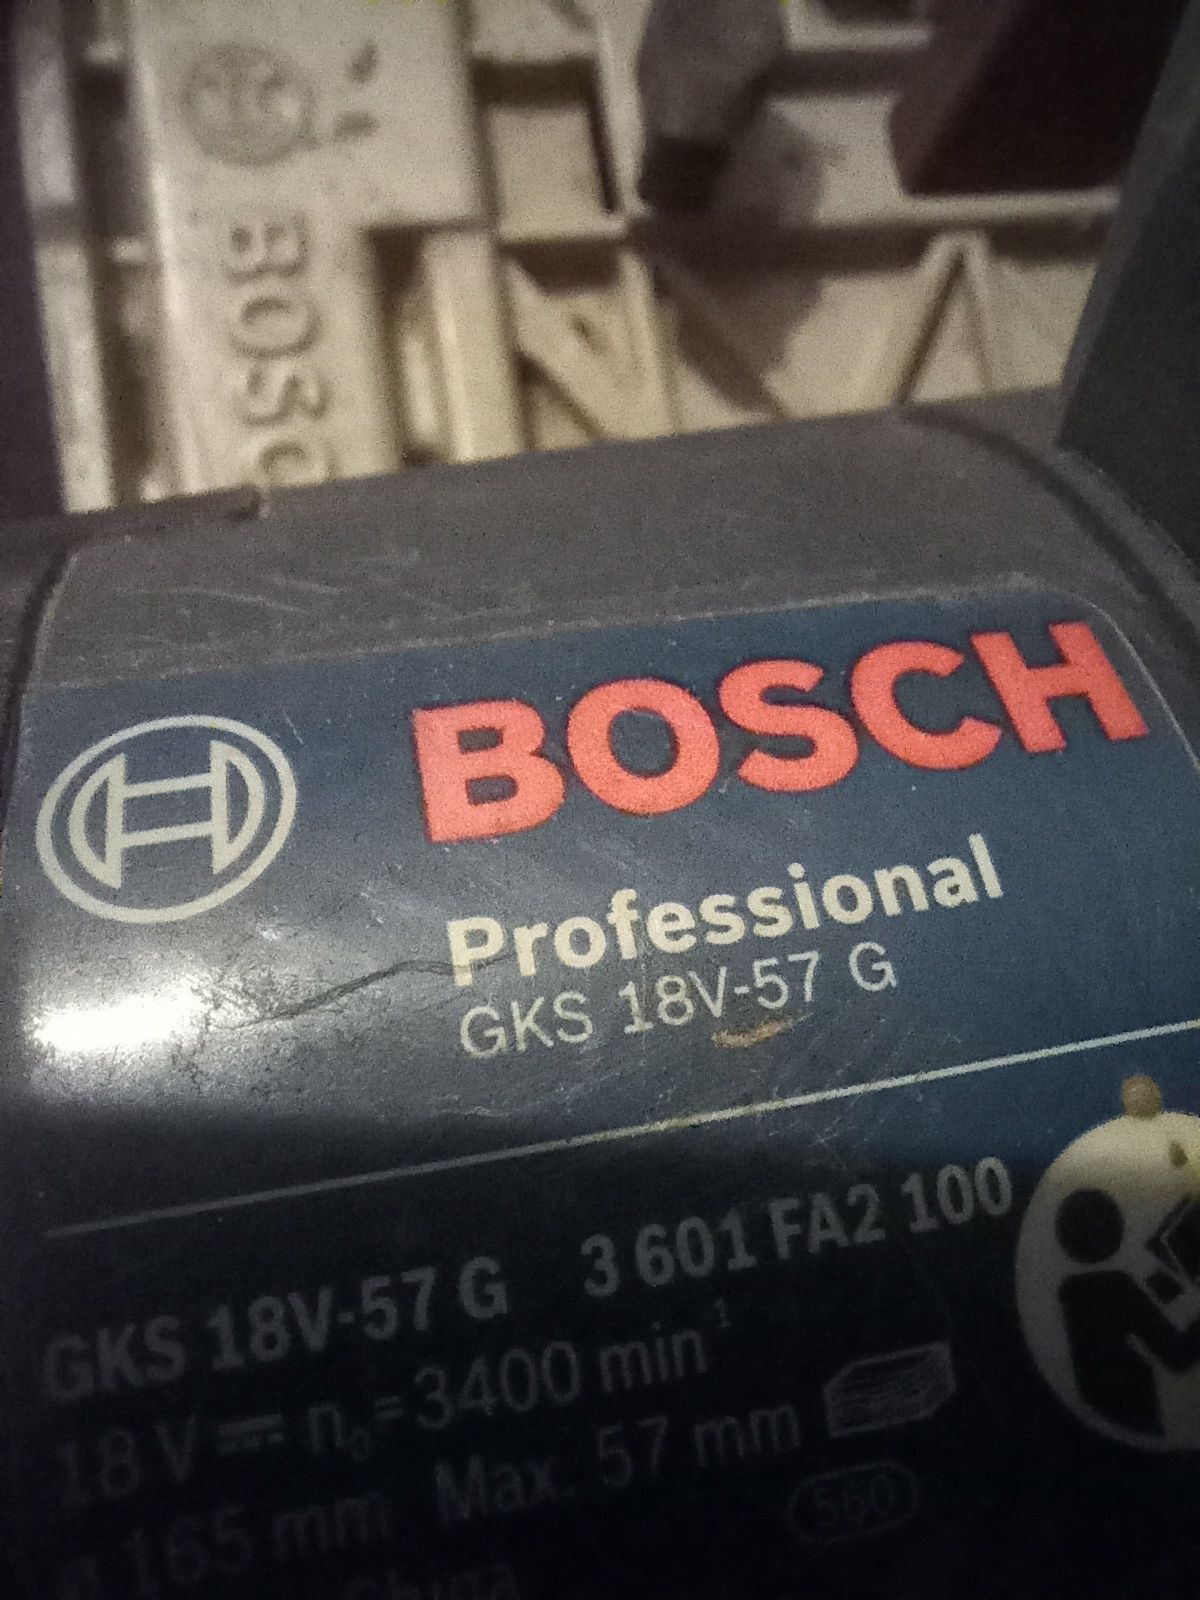 Circular de mana profesional Bosch GKS 18v-57 G .Li-Ion